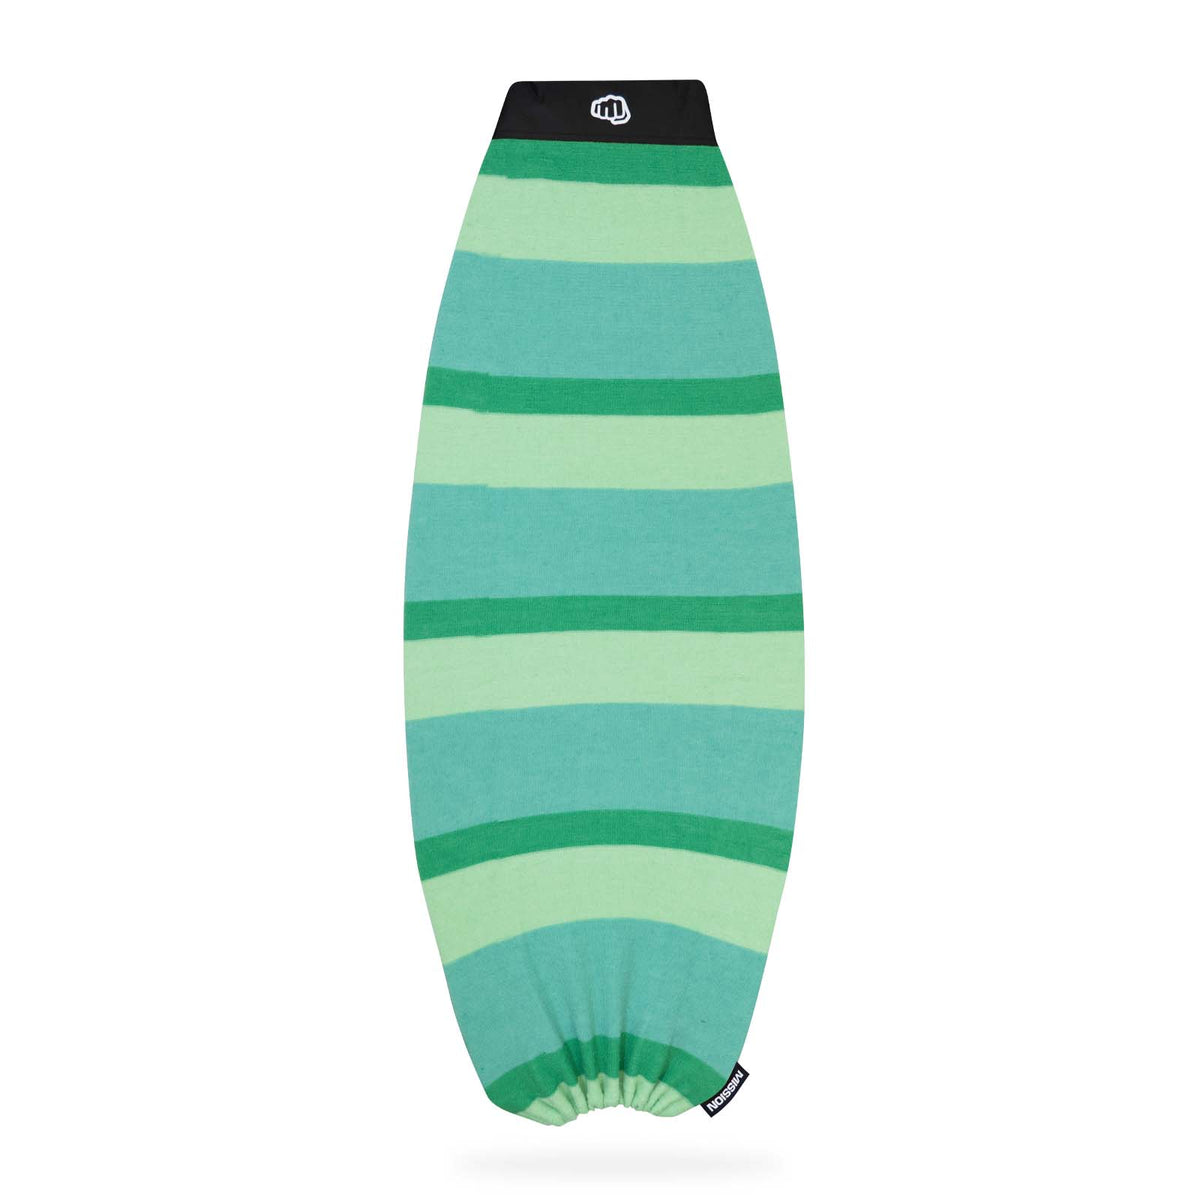 Classic Wakesurf Board Socks